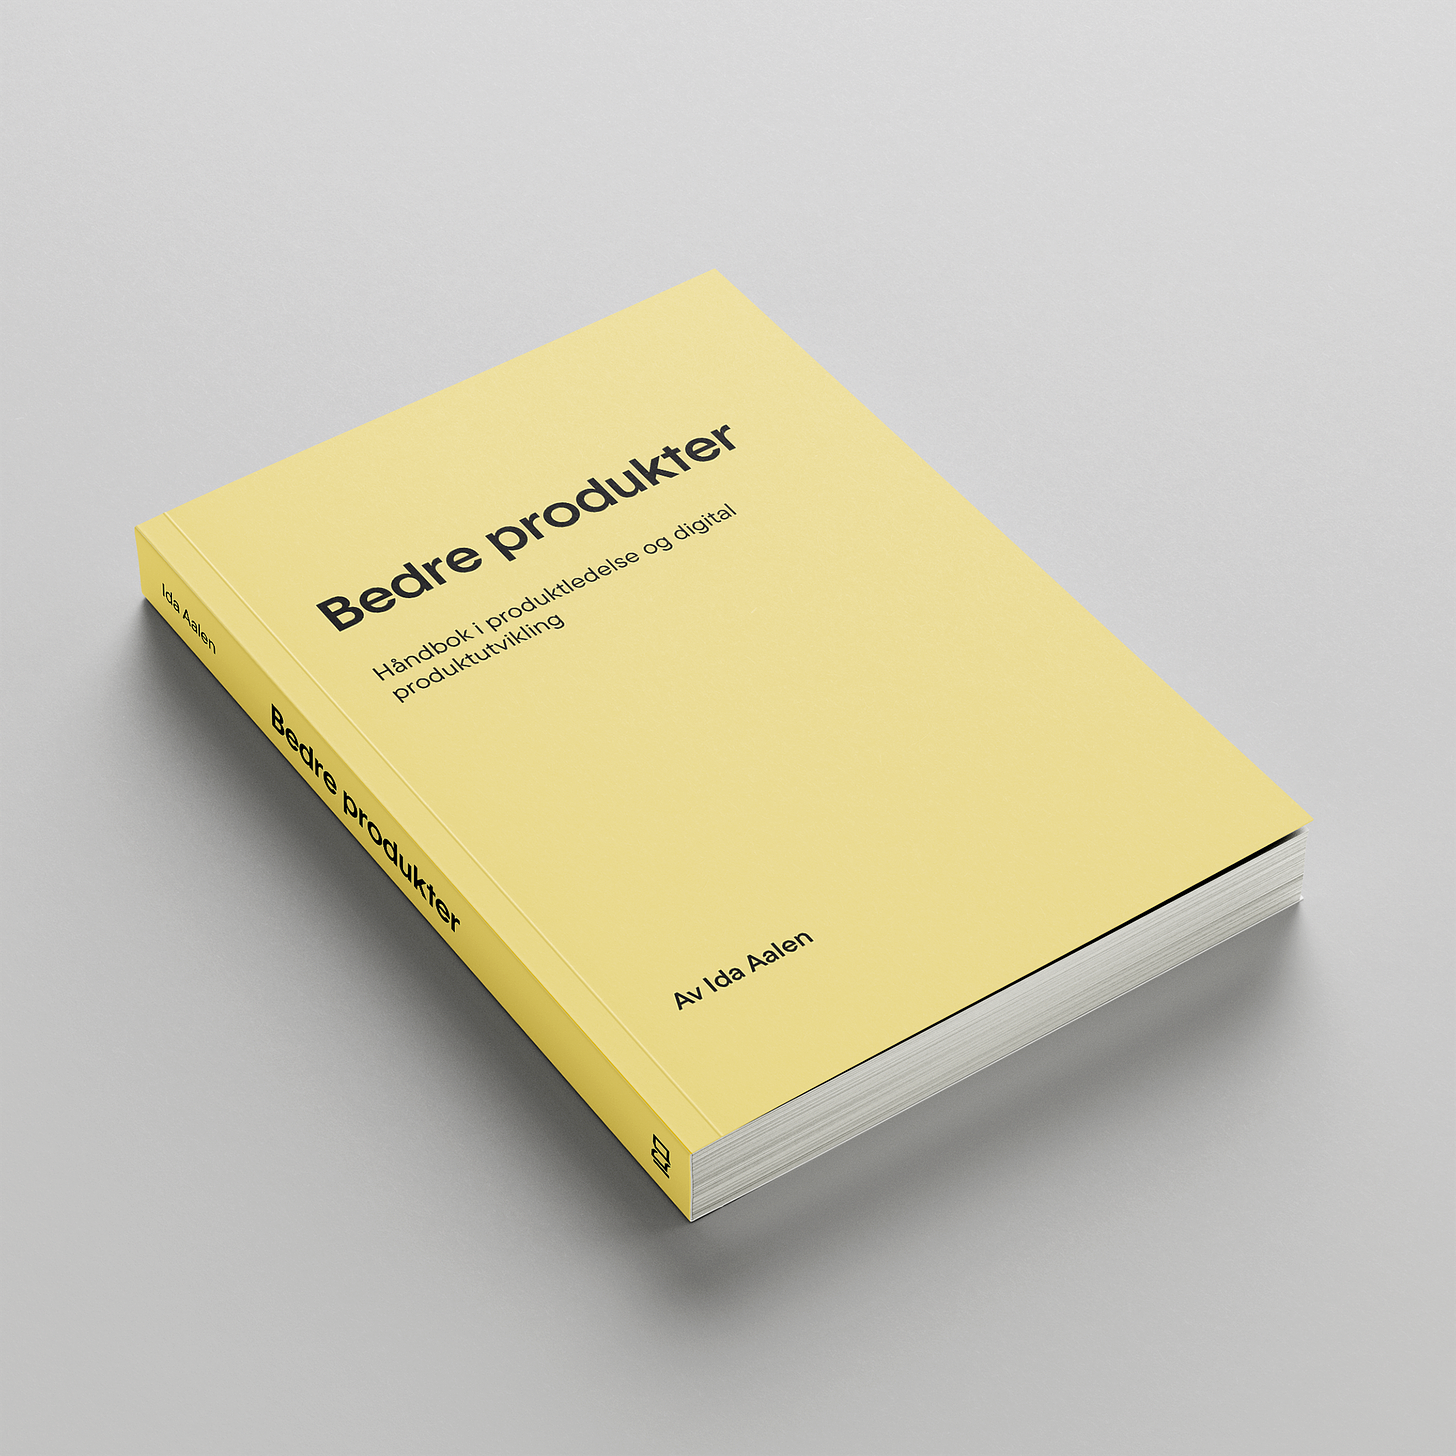 En gul bok med tittelen "Bedre produkter". 